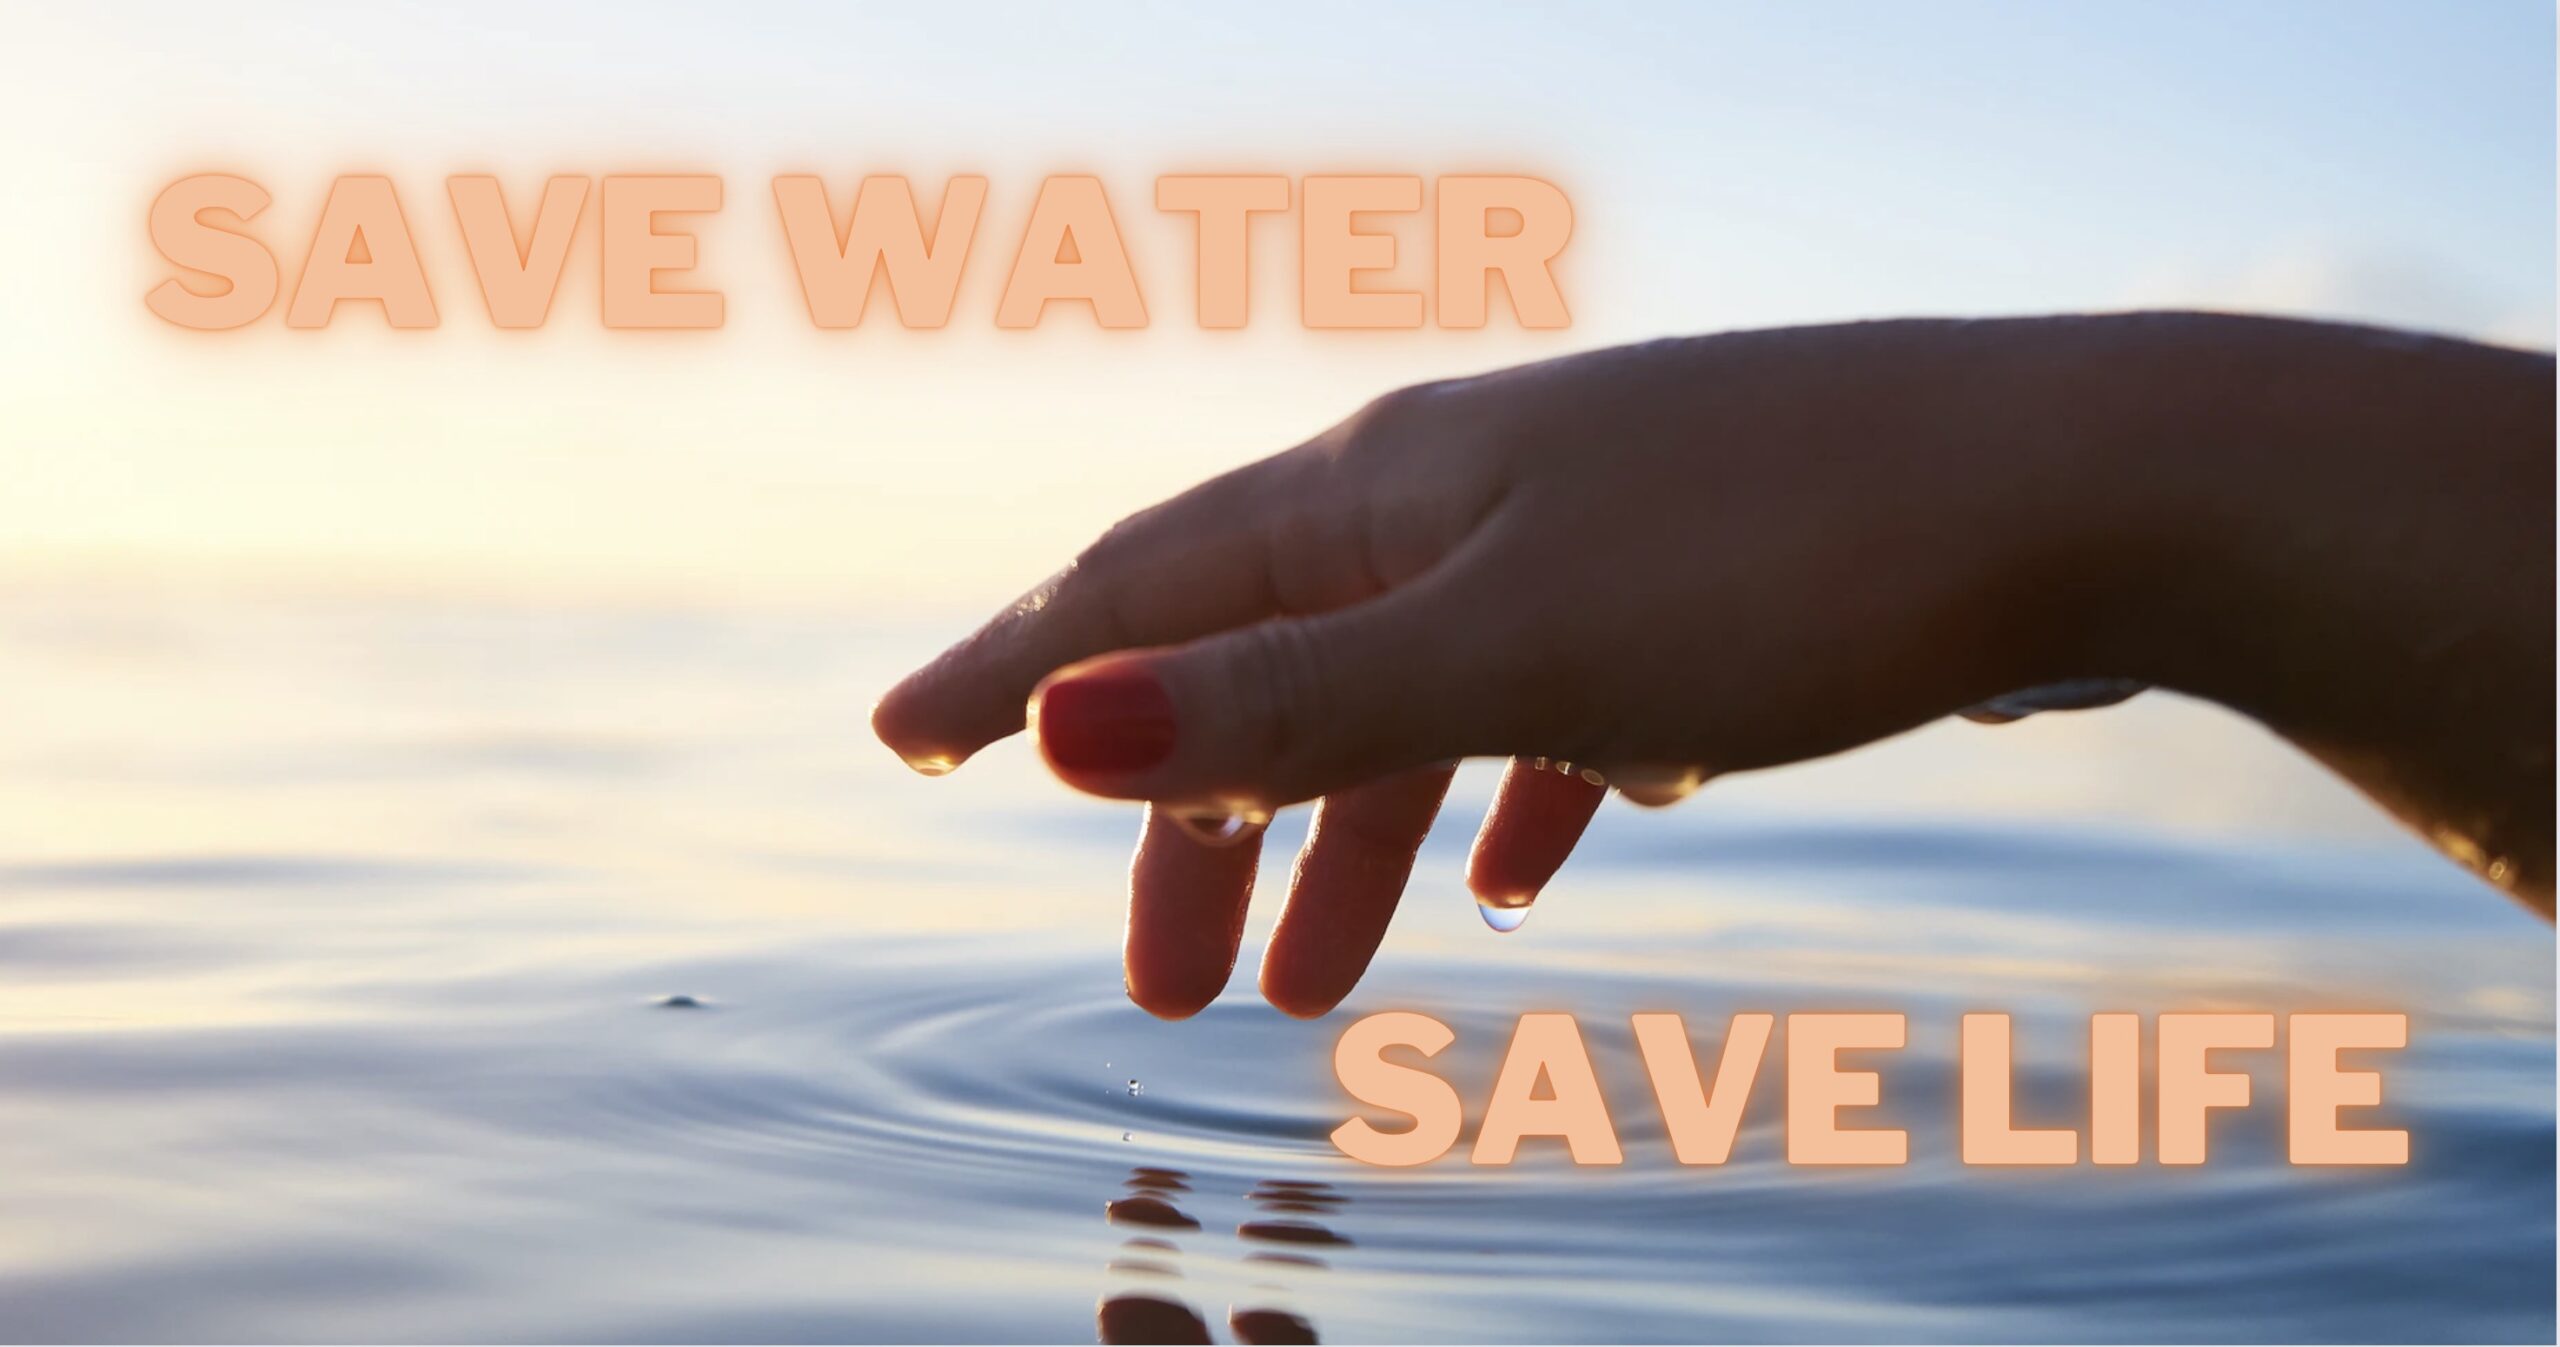 Save Water. Save Life.